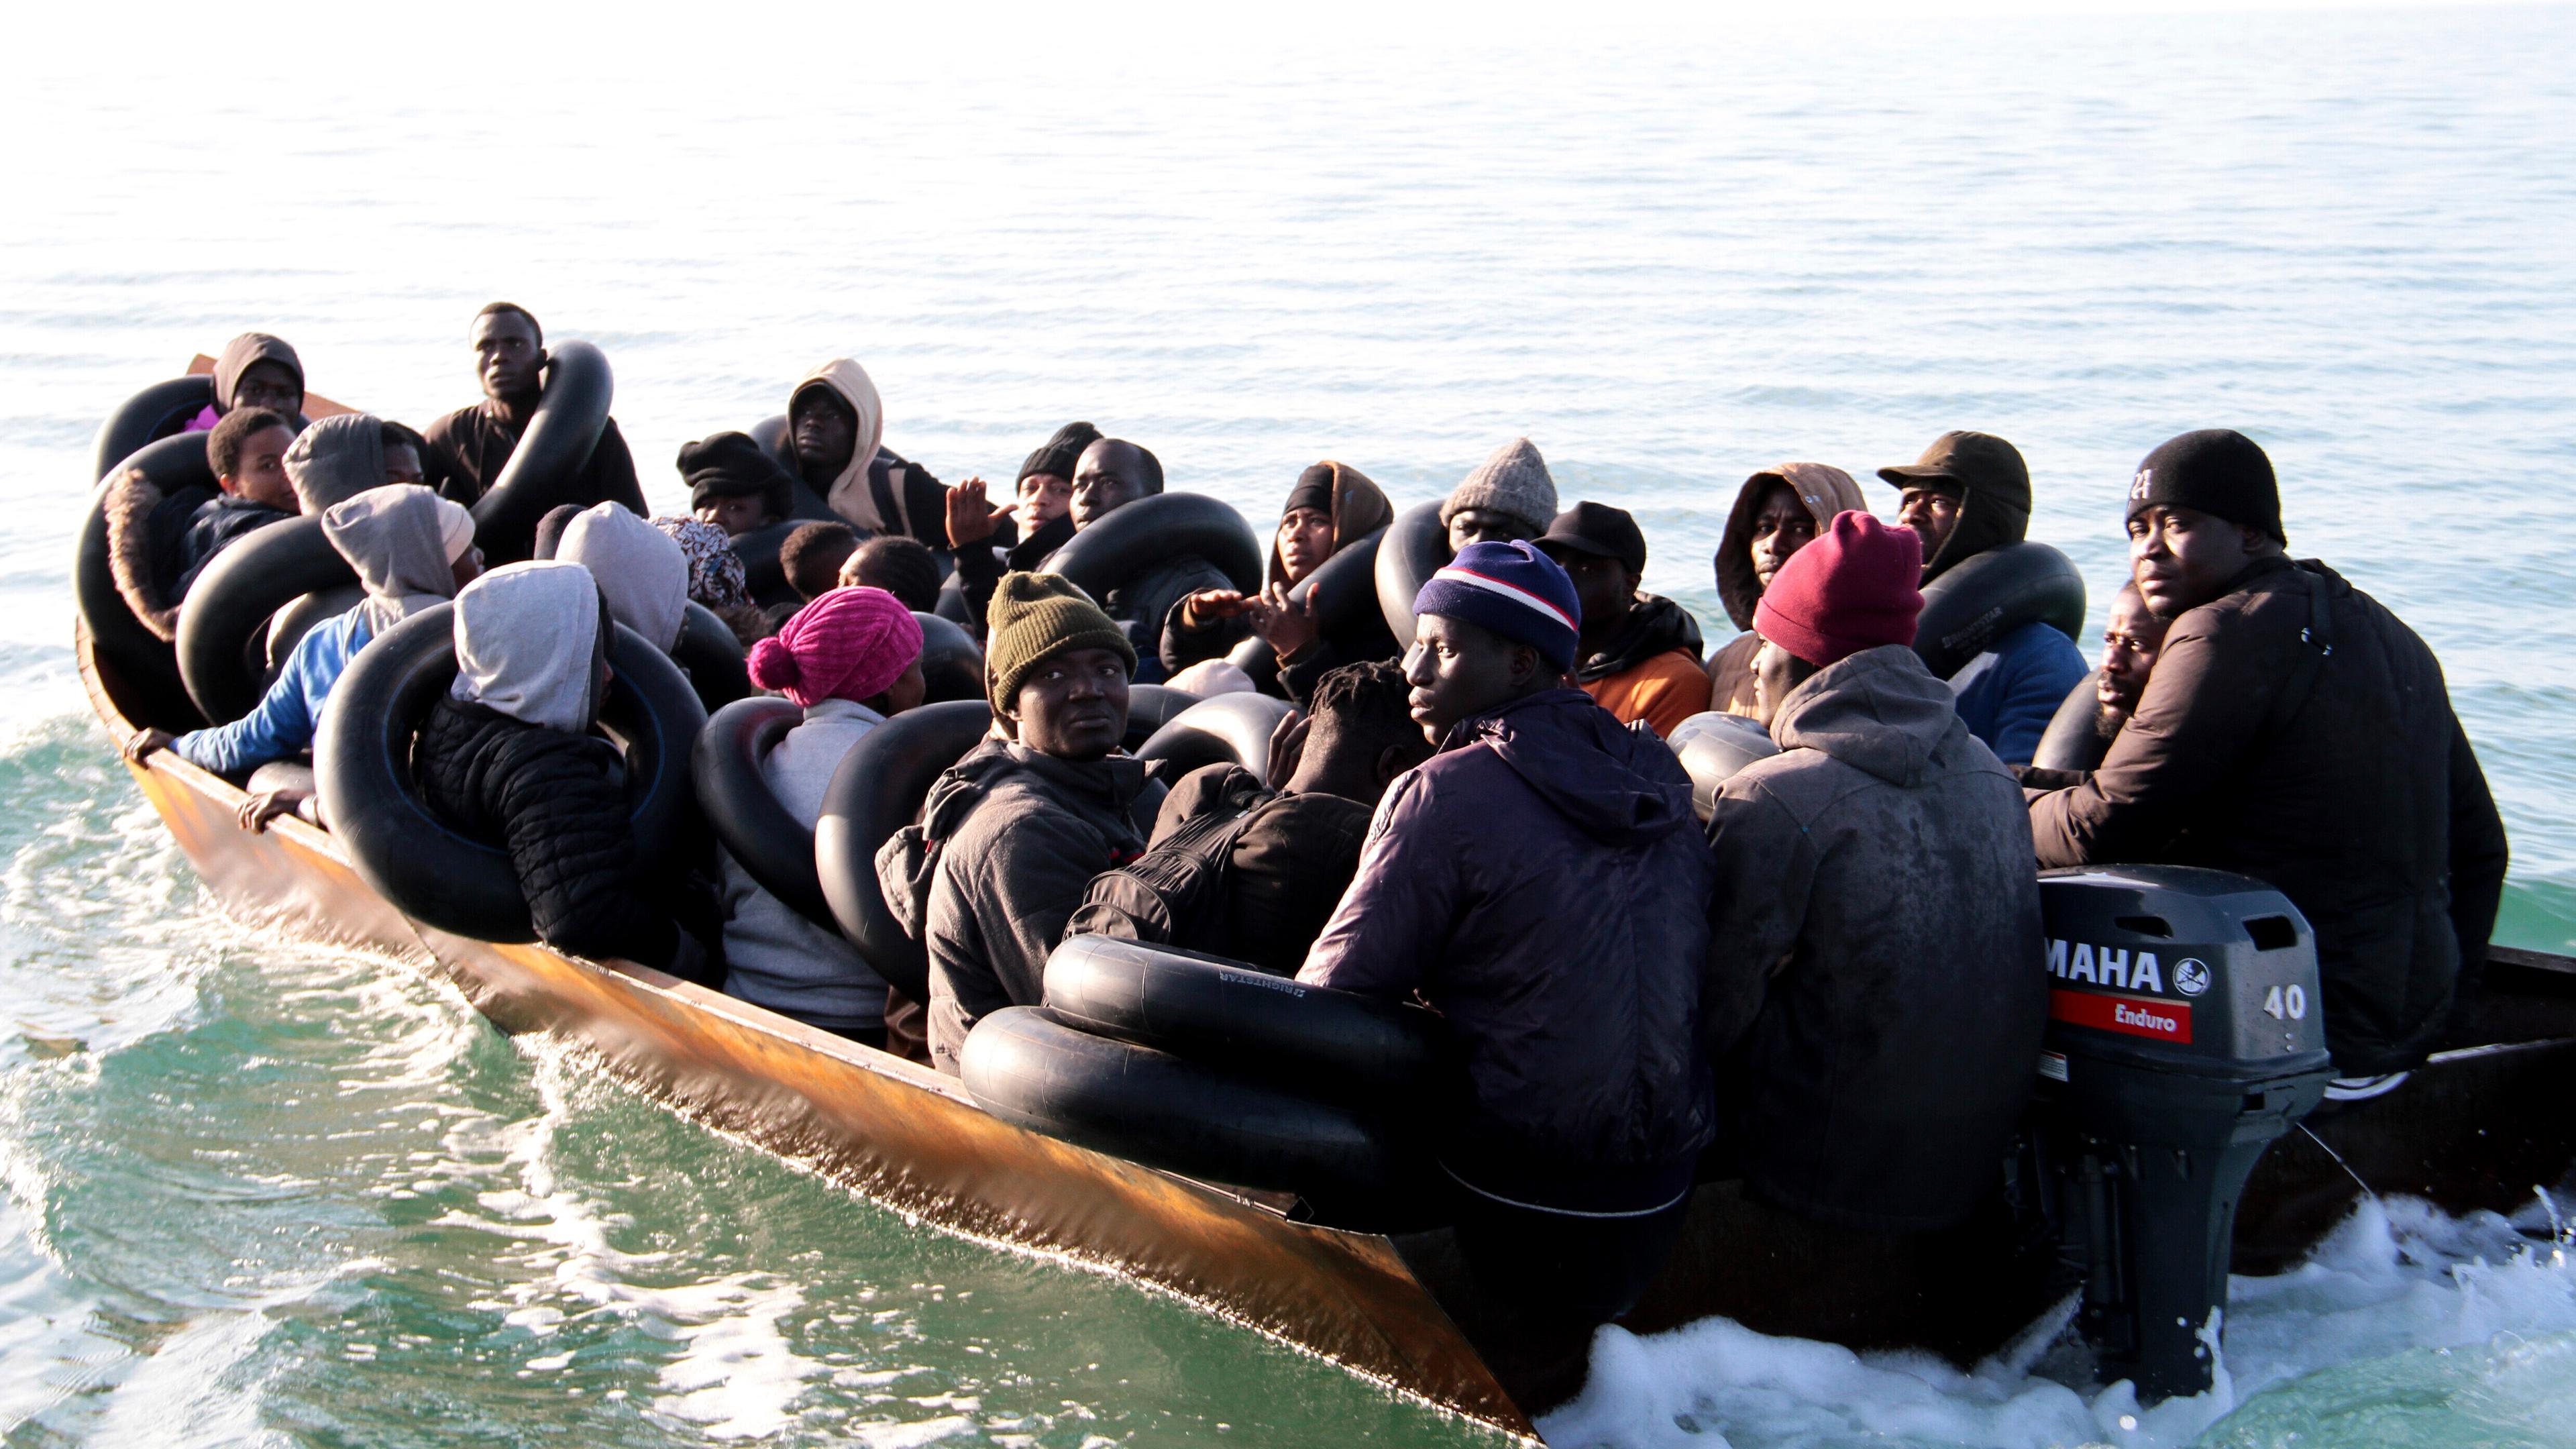 Flüchtlinge auf Boot im Mittelmeer